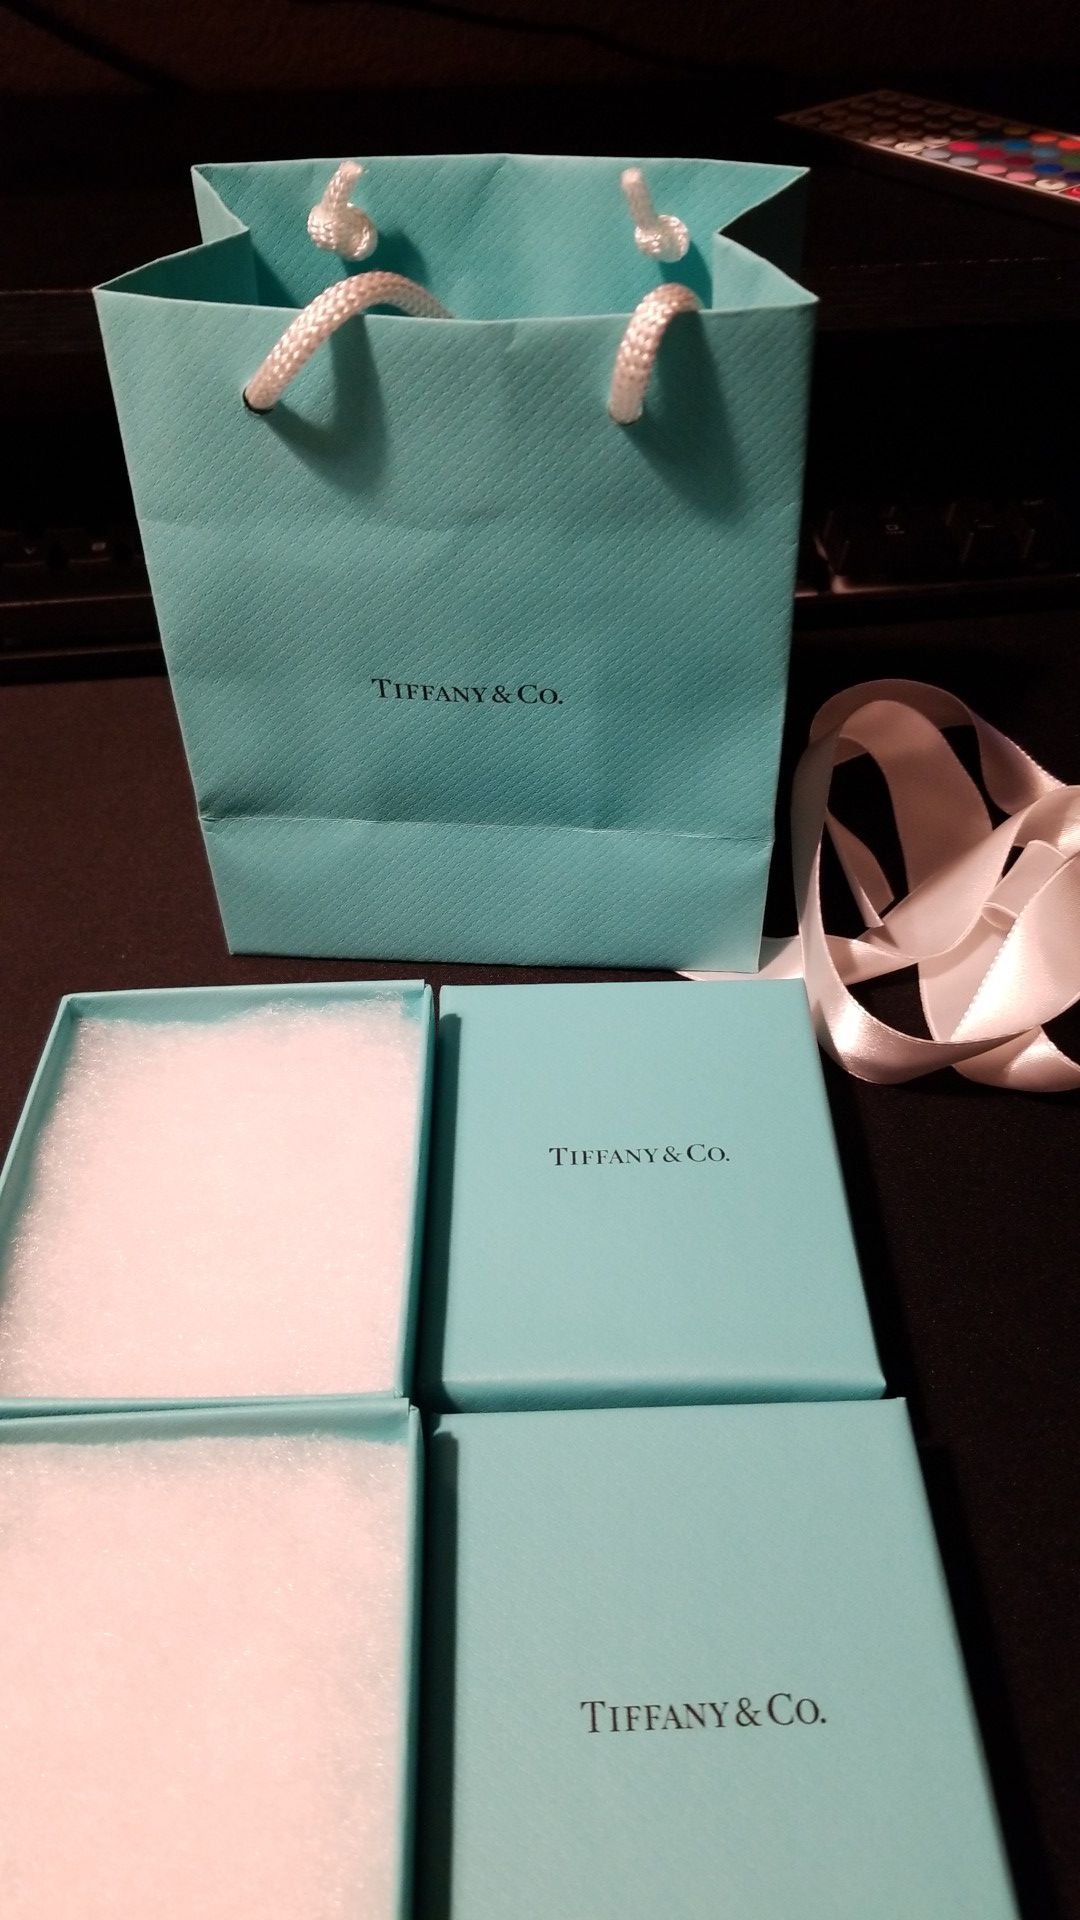 Original Tiffany bag and box only